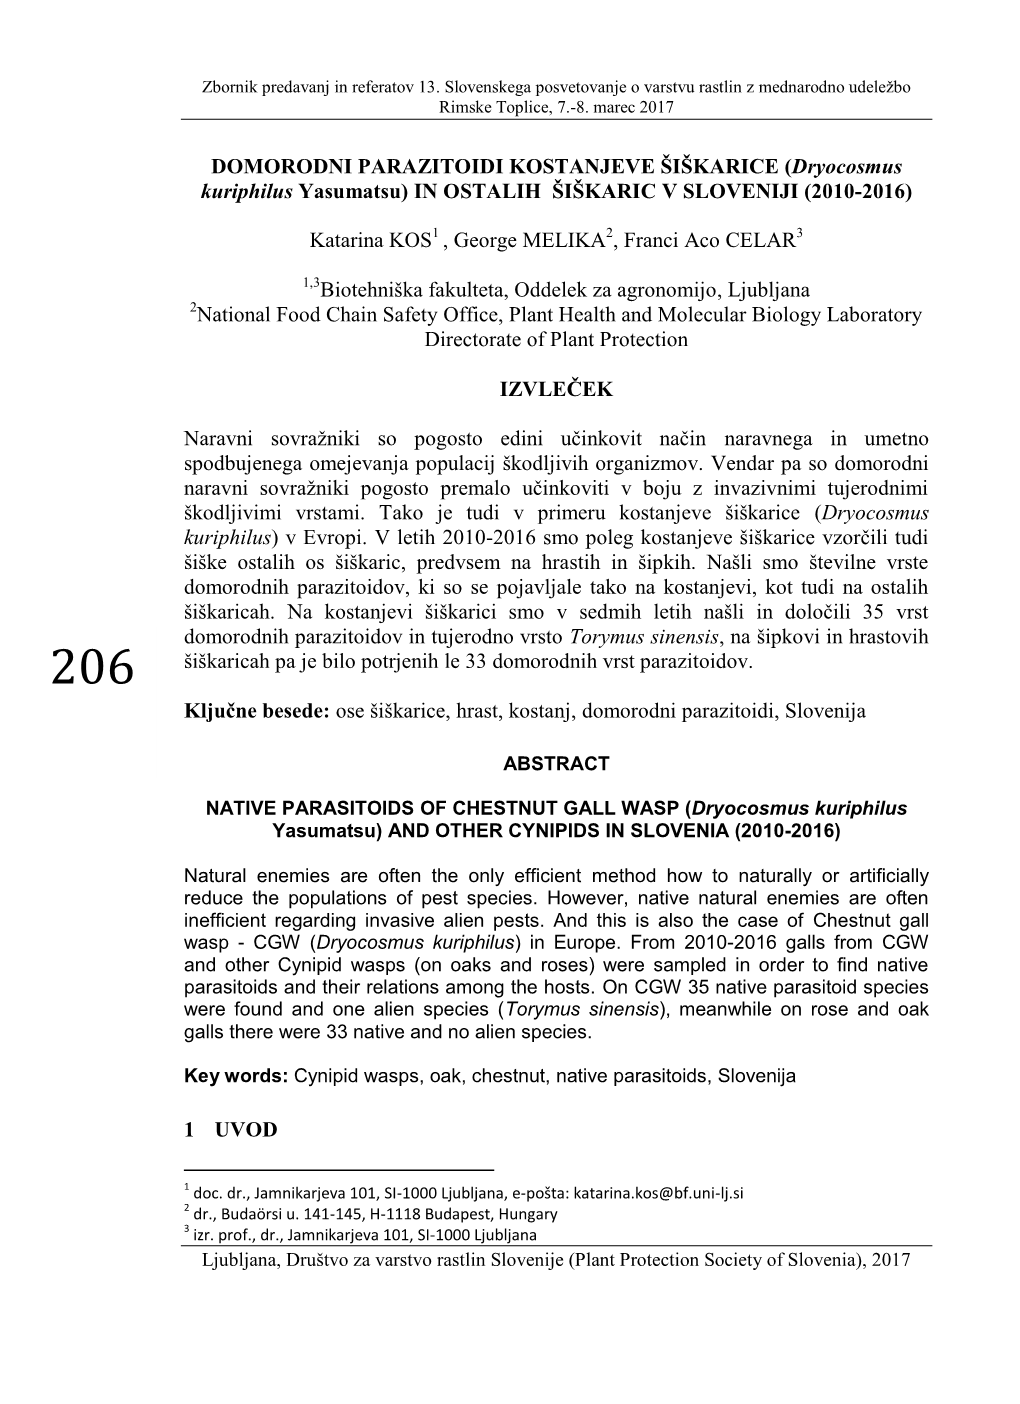 DOMORODNI PARAZITOIDI KOSTANJEVE ŠIŠKARICE (Dryocosmus Kuriphilus Yasumatsu) in OSTALIH ŠIŠKARIC V SLOVENIJI (2010-2016)